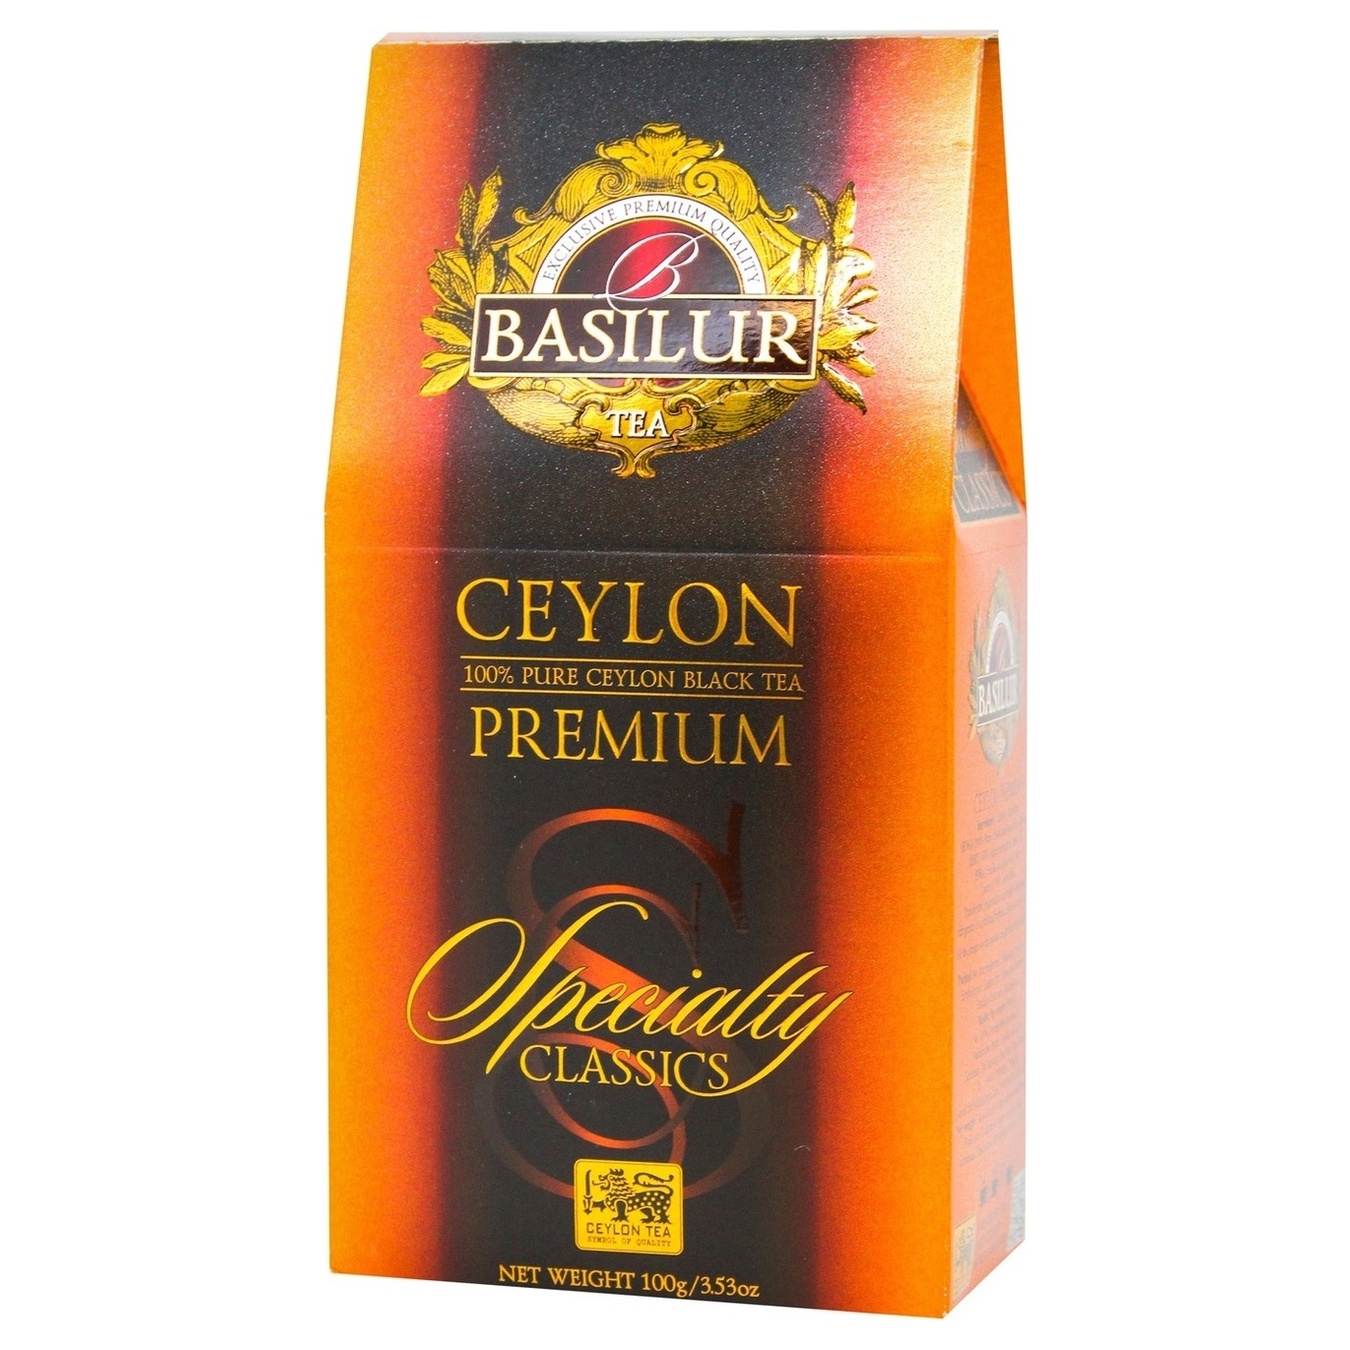 Black tea Basilur TEA collection Selected classics Ceylon 100g carton